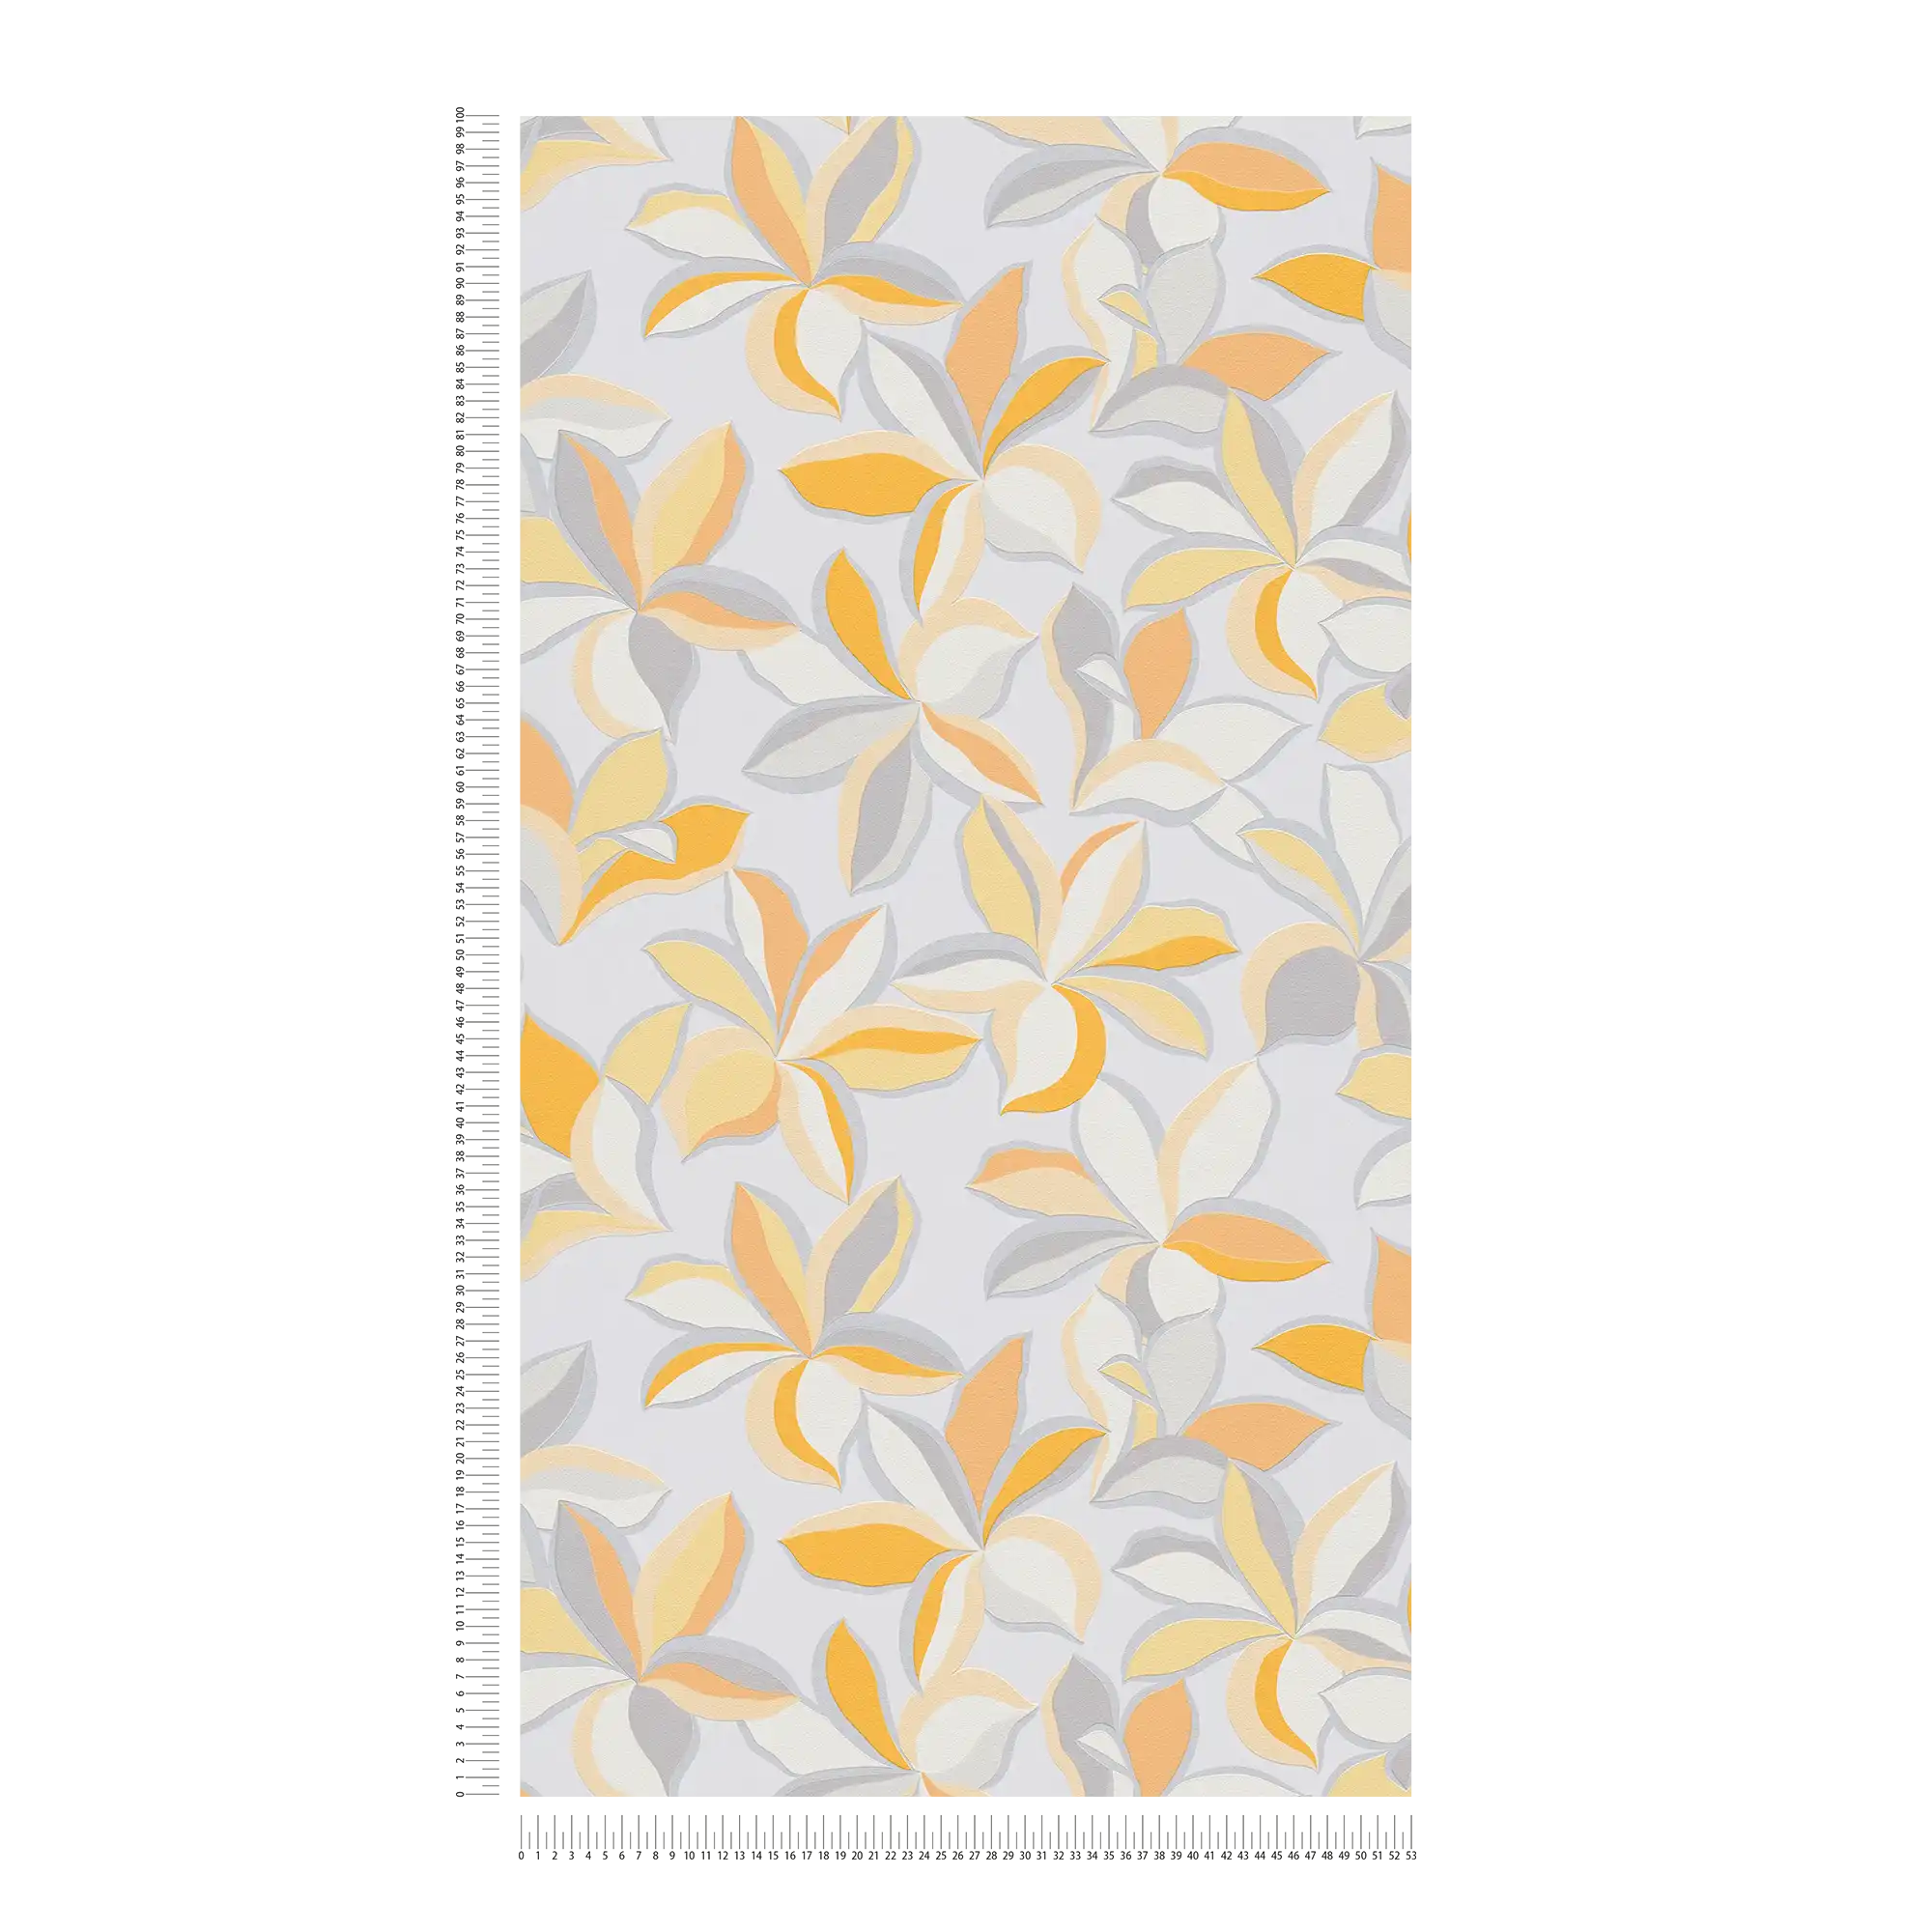             Vliestapete mit Blumenmuster & Metallic-Look – Gelb, Orange, Grau
        